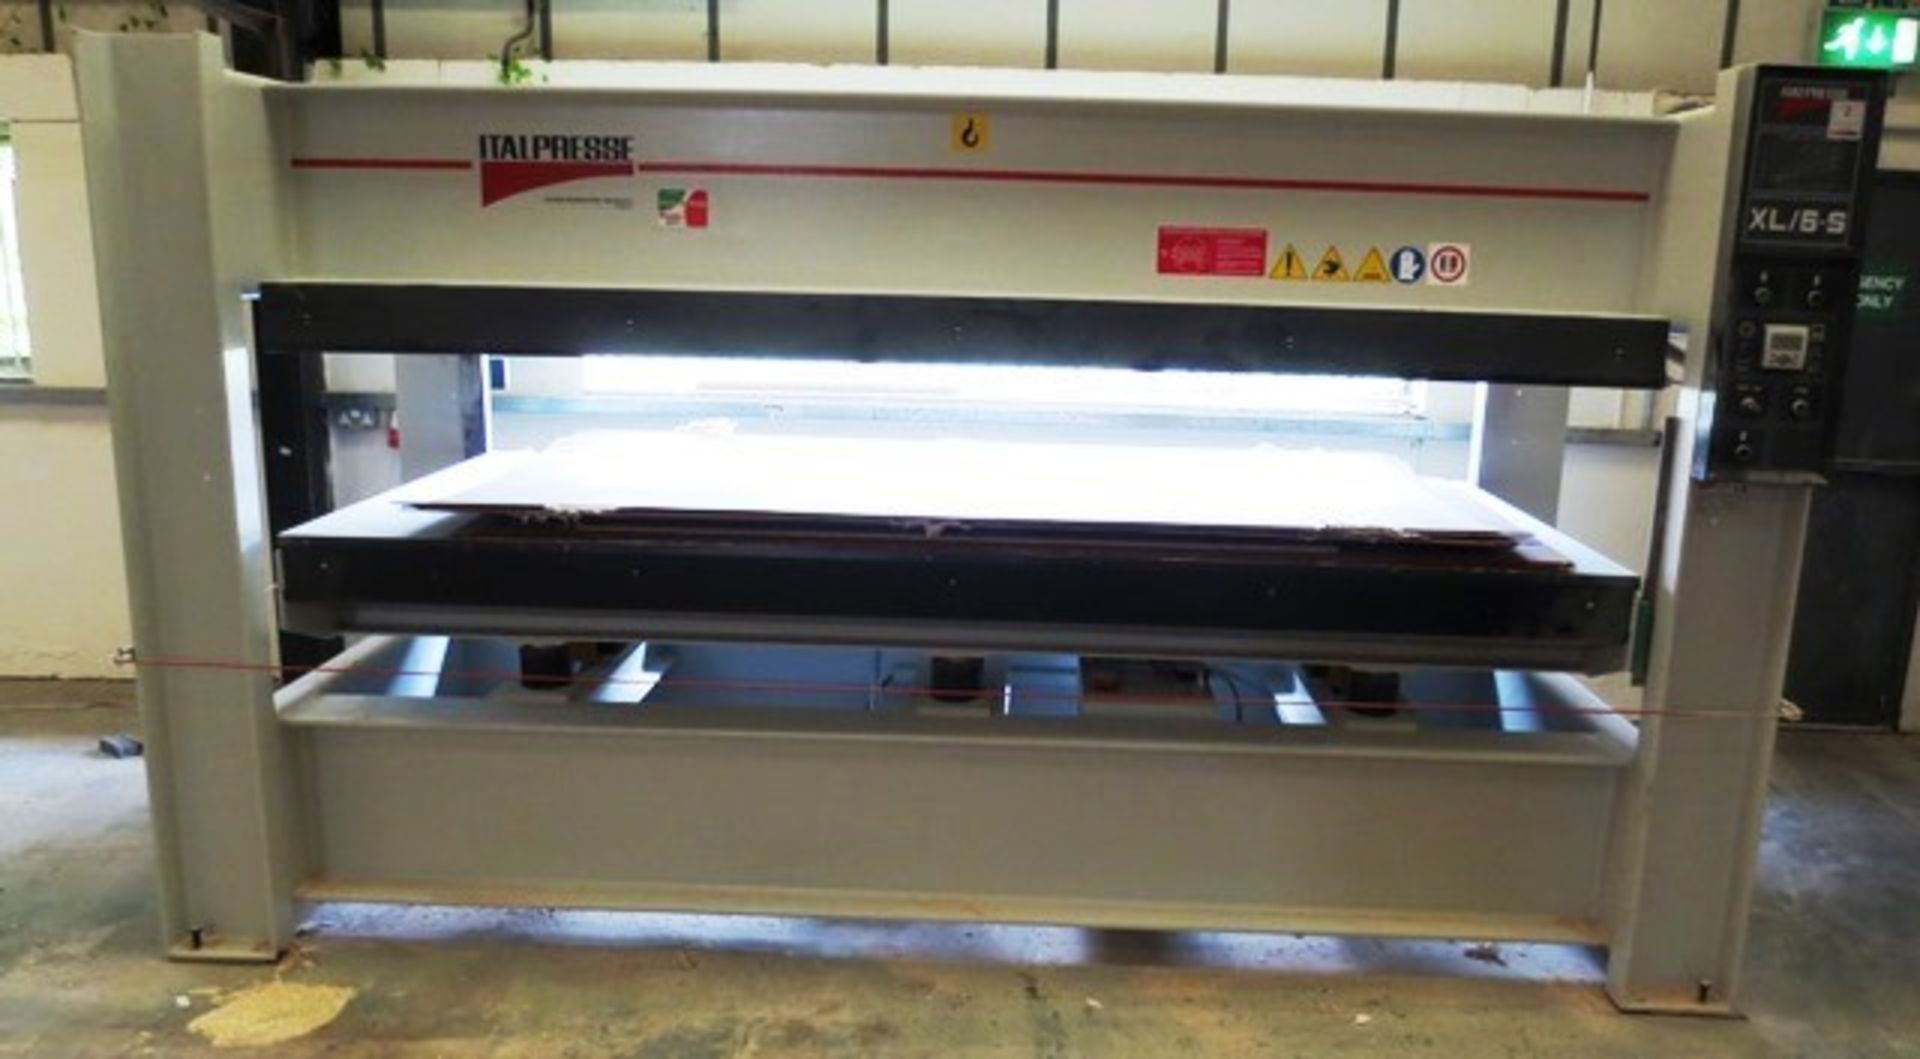 Italpresse Pressa A Caldo hydraulic hot press, machine type: XL/6-S, serial no: 186530315 (2015), - Image 2 of 10